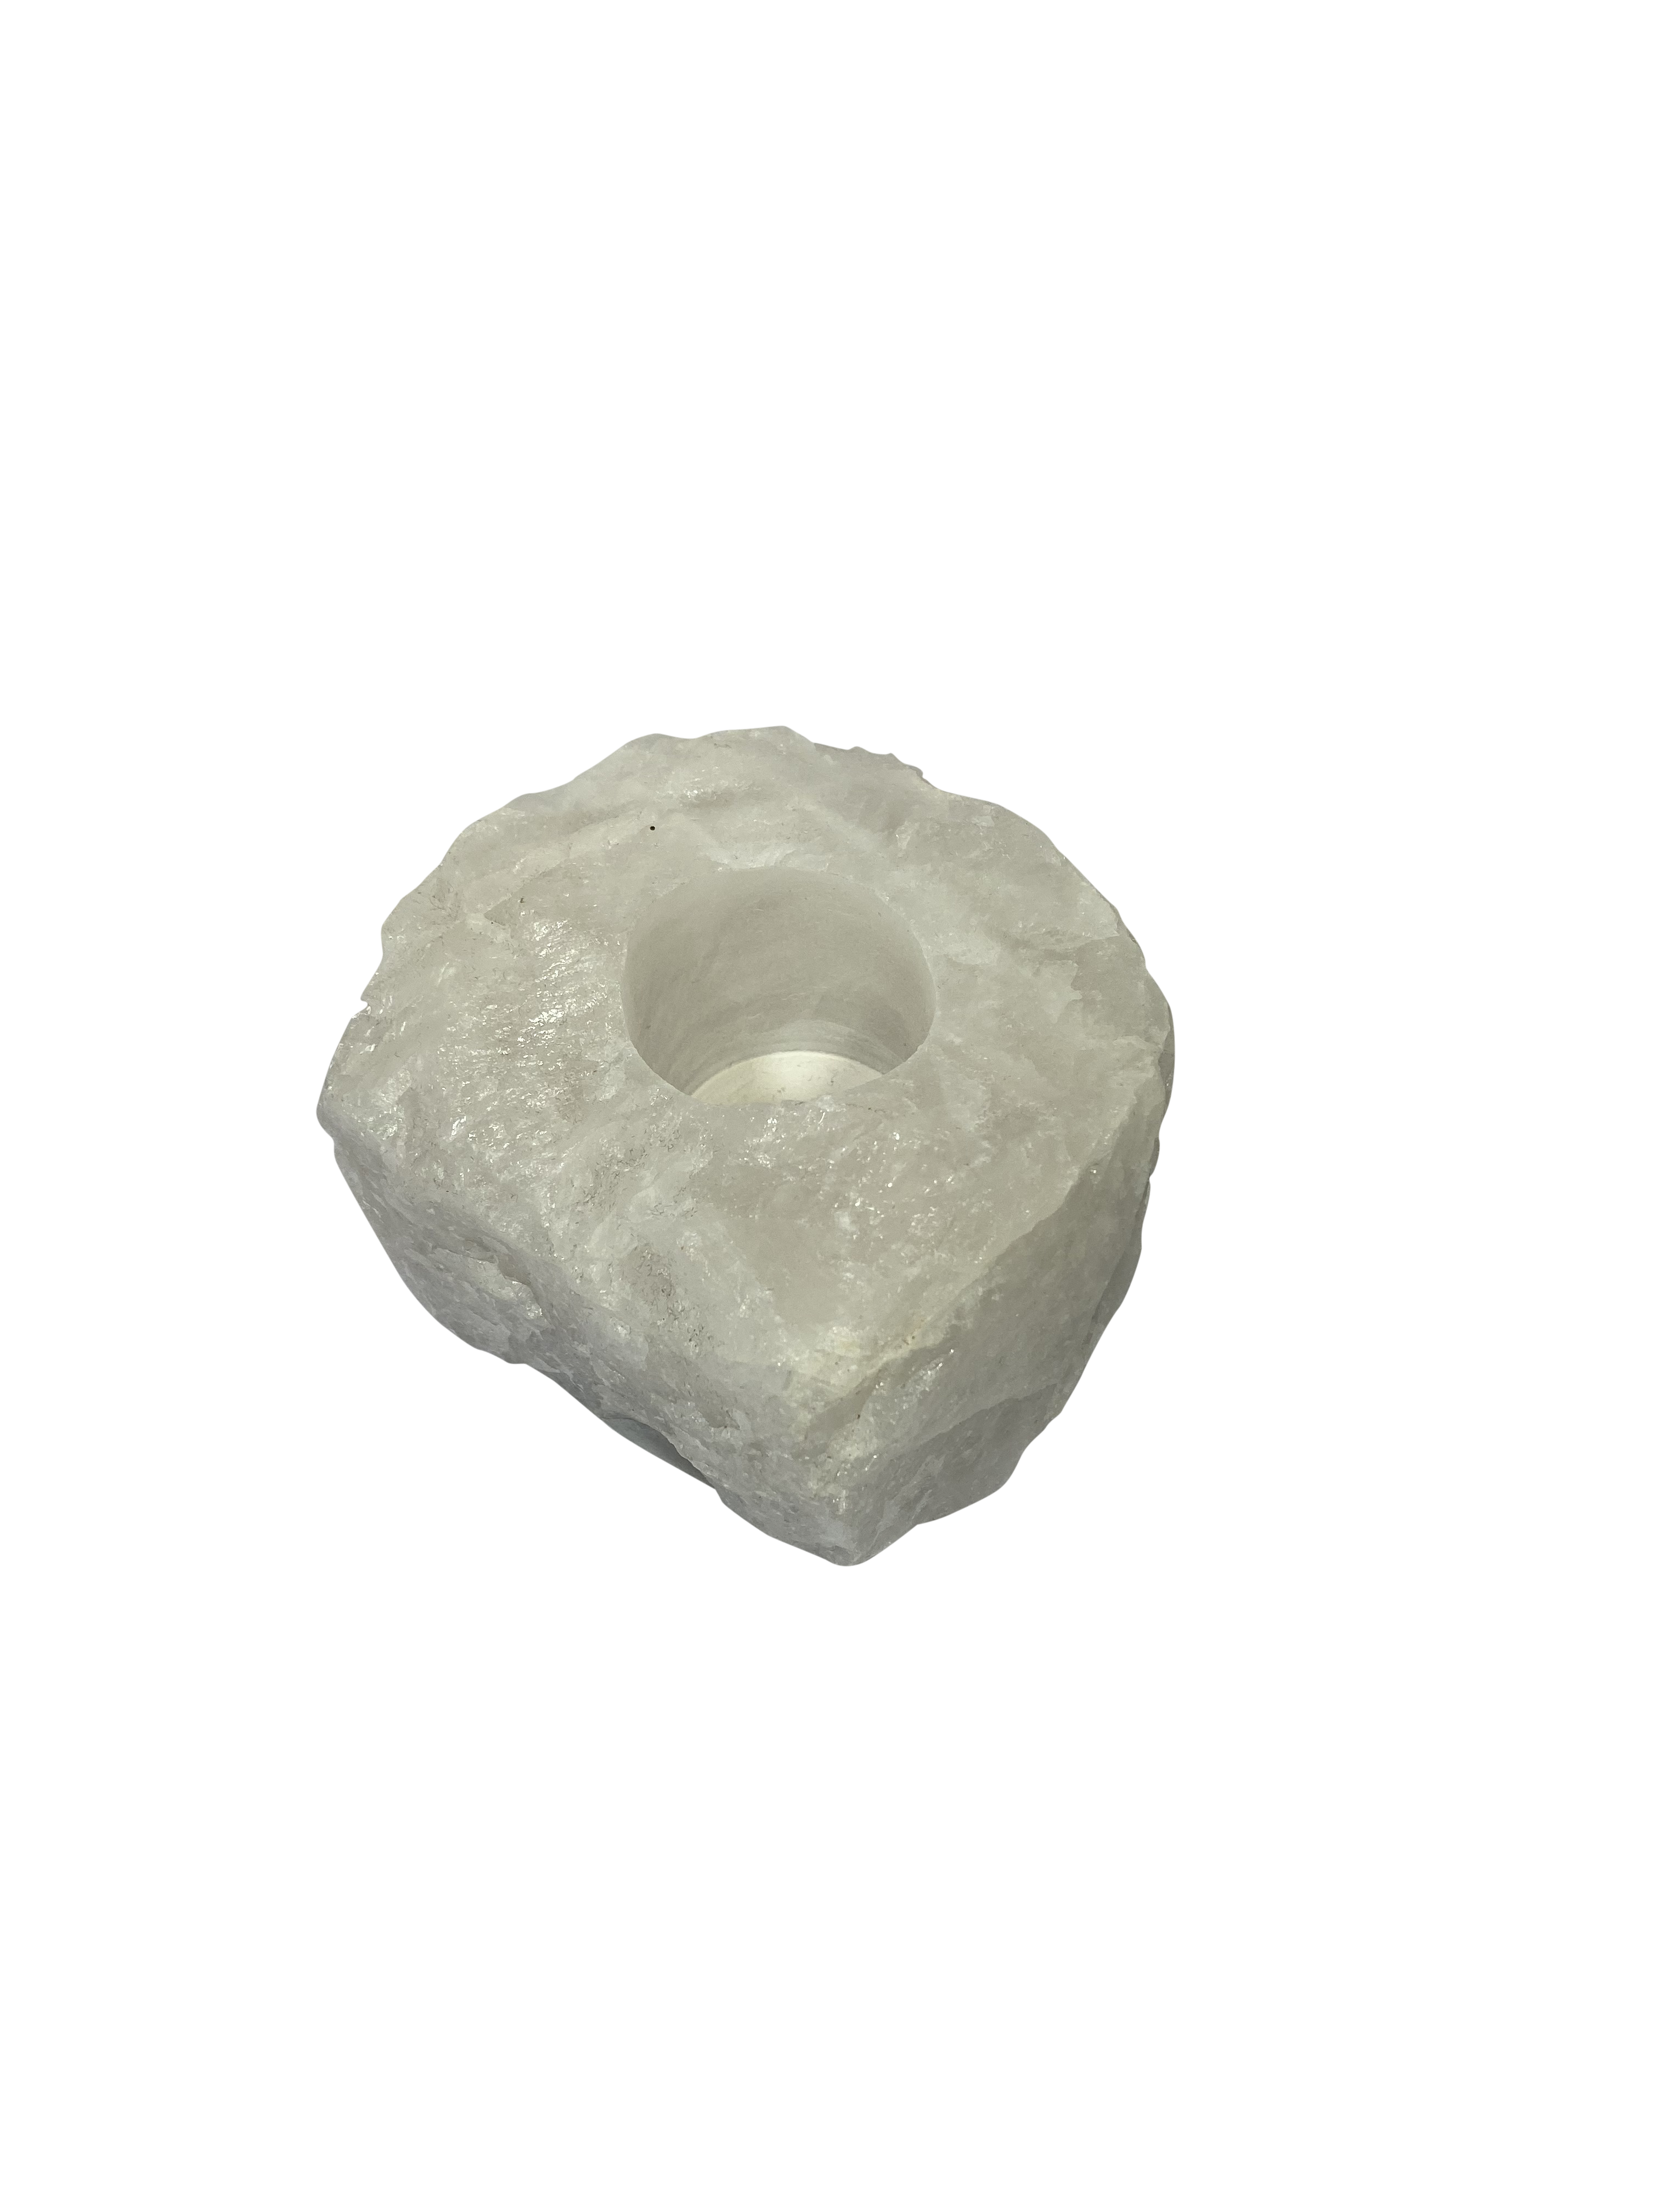 Rough Natural White Quartz Crystal Tealight Candle Holder